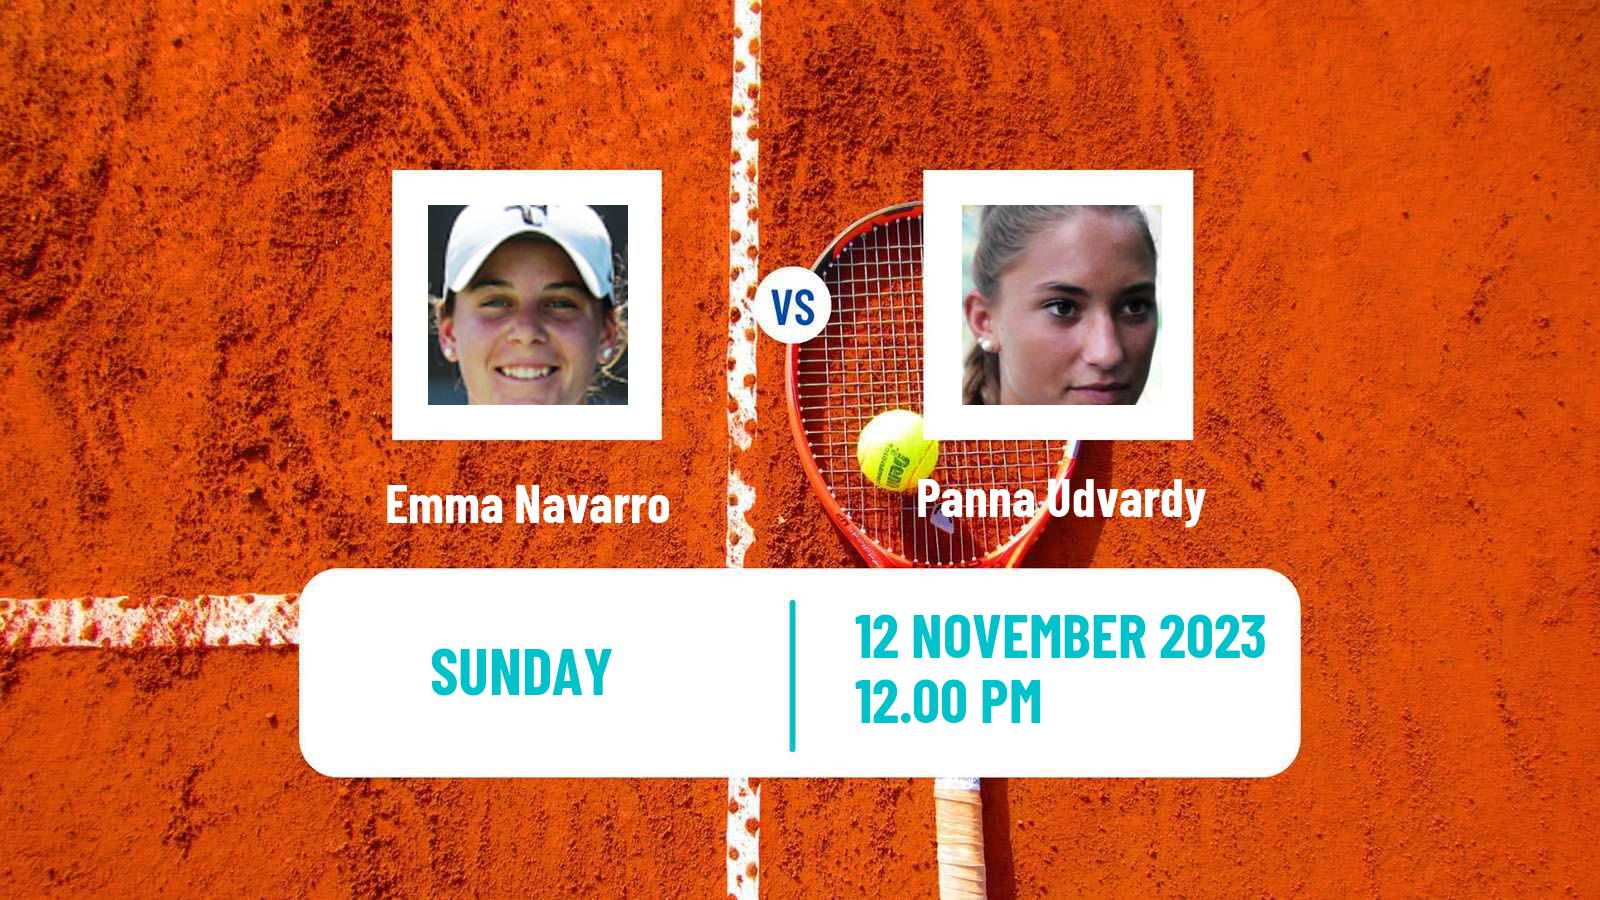 Tennis ITF W100 Charleston Sc 2 Women Emma Navarro - Panna Udvardy